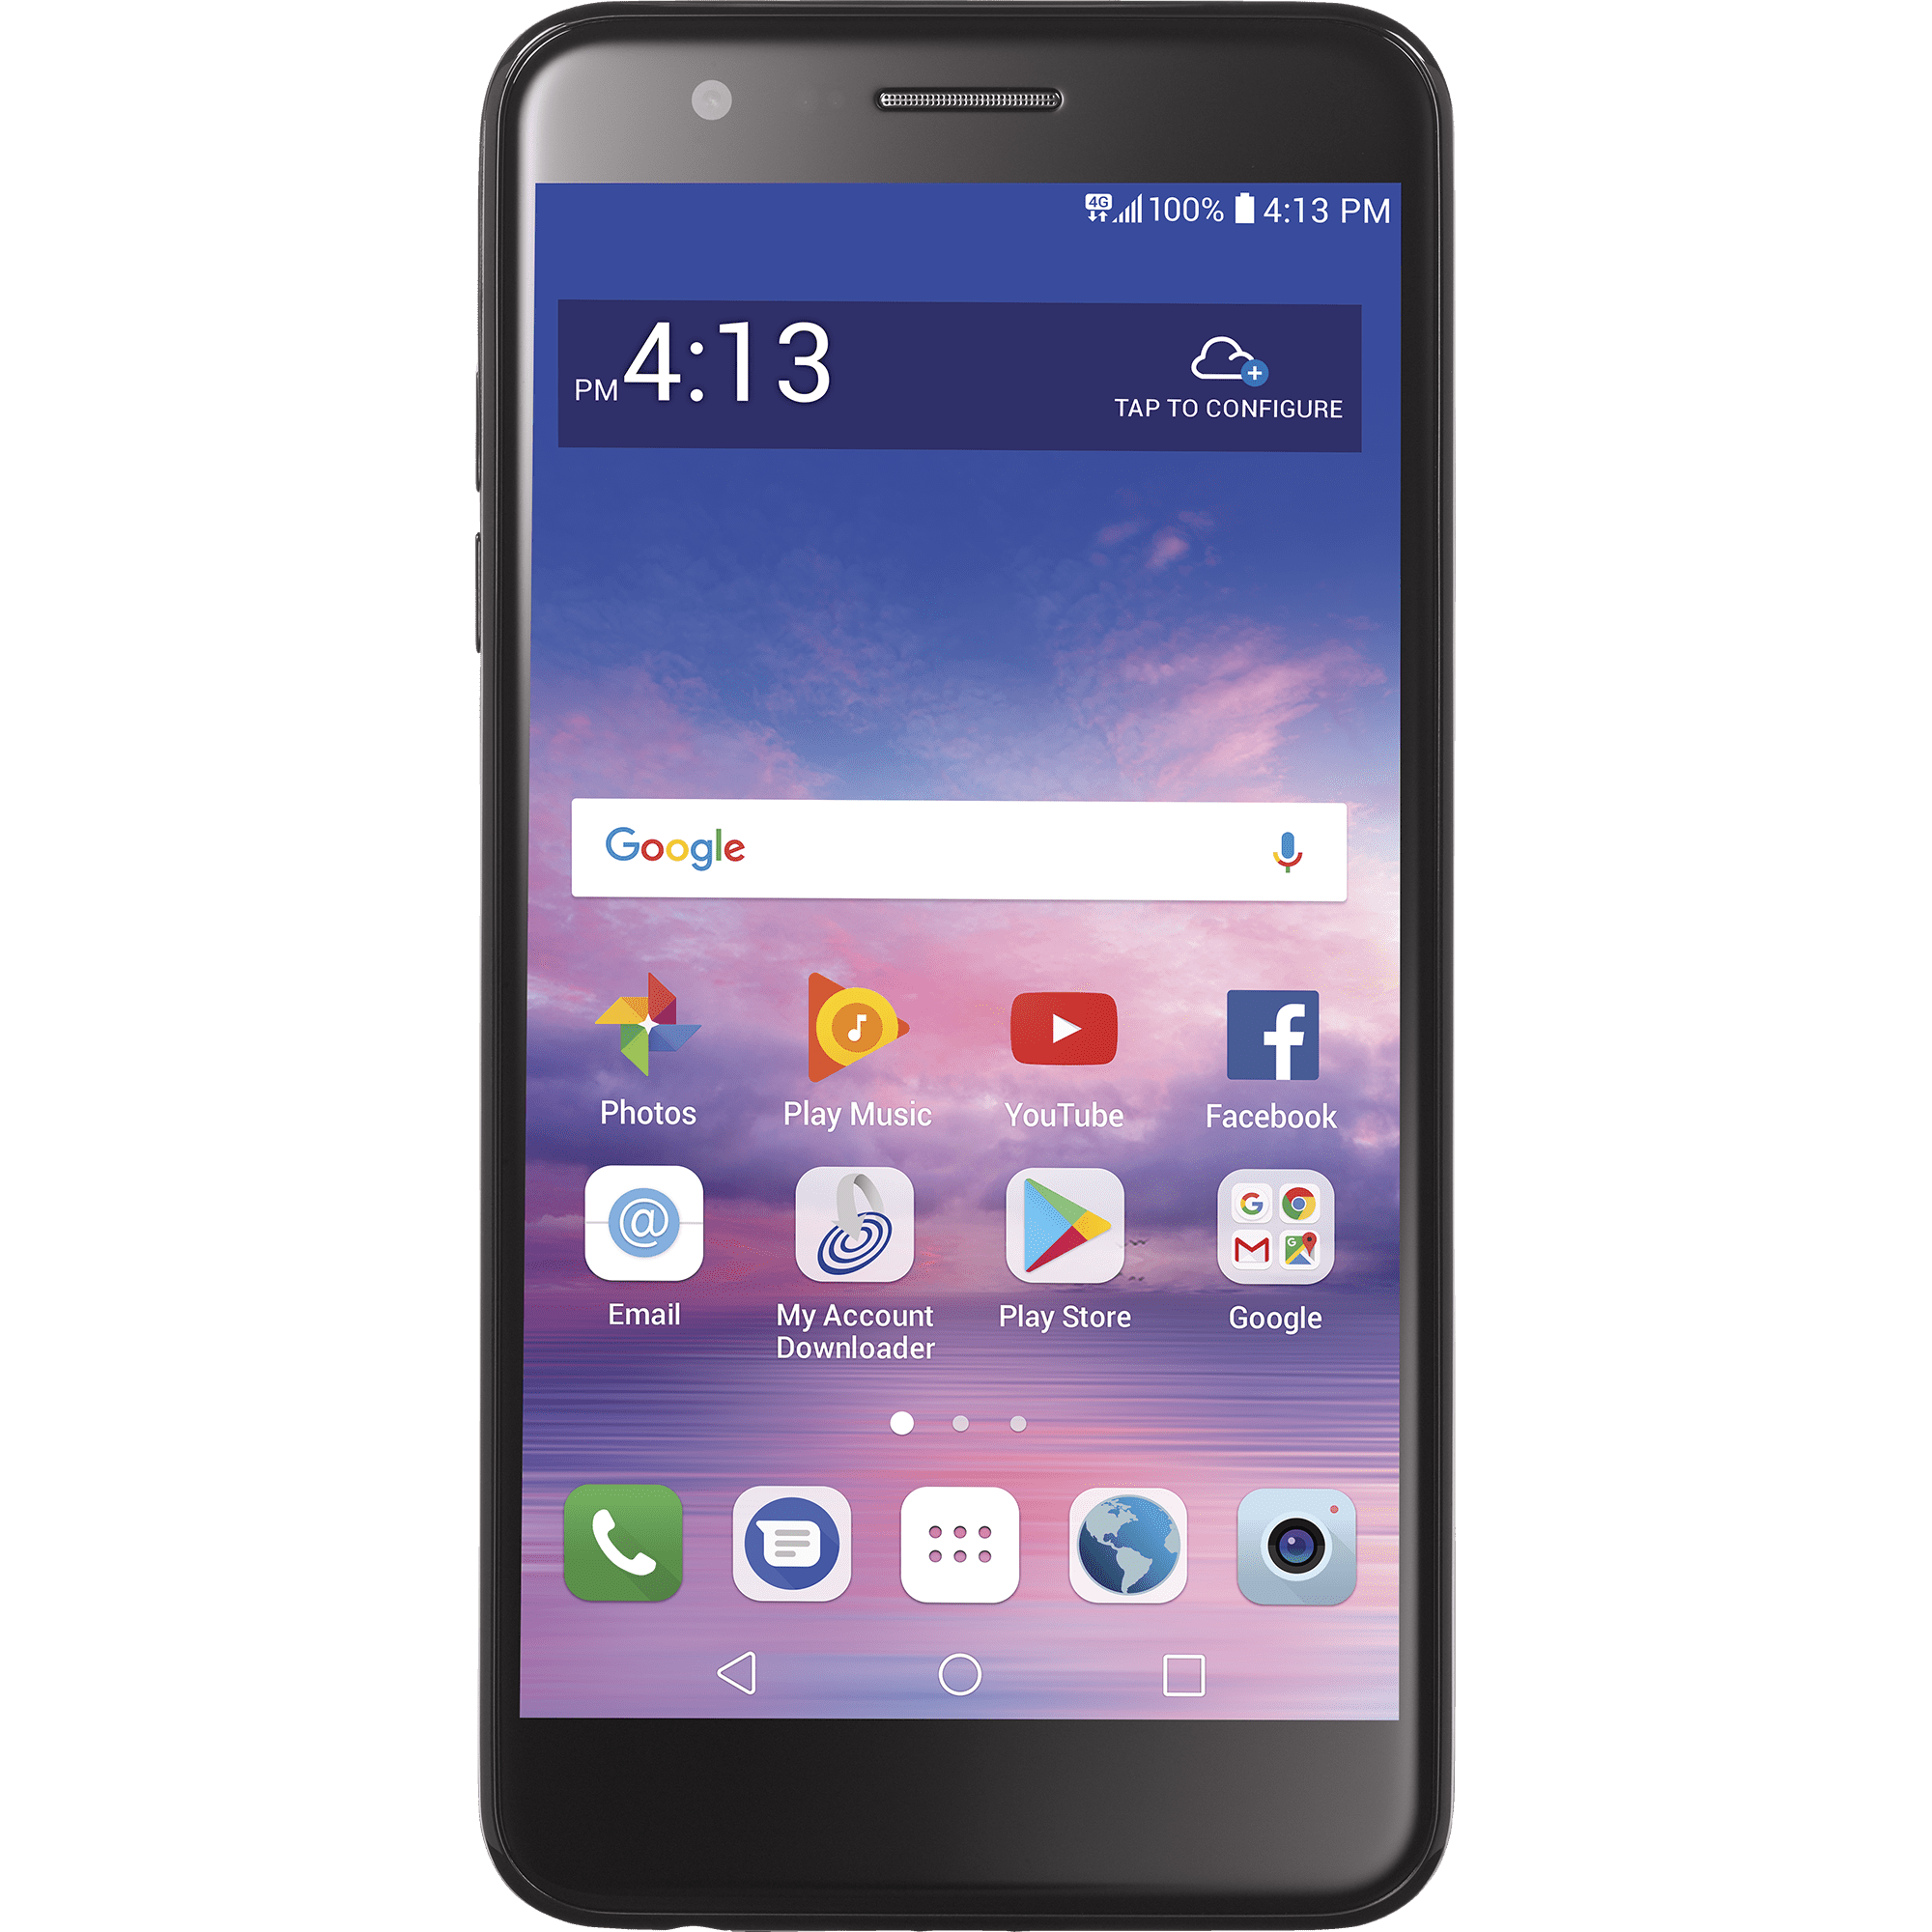 Total Wireless LG Premier Pro Prepaid Smartphone